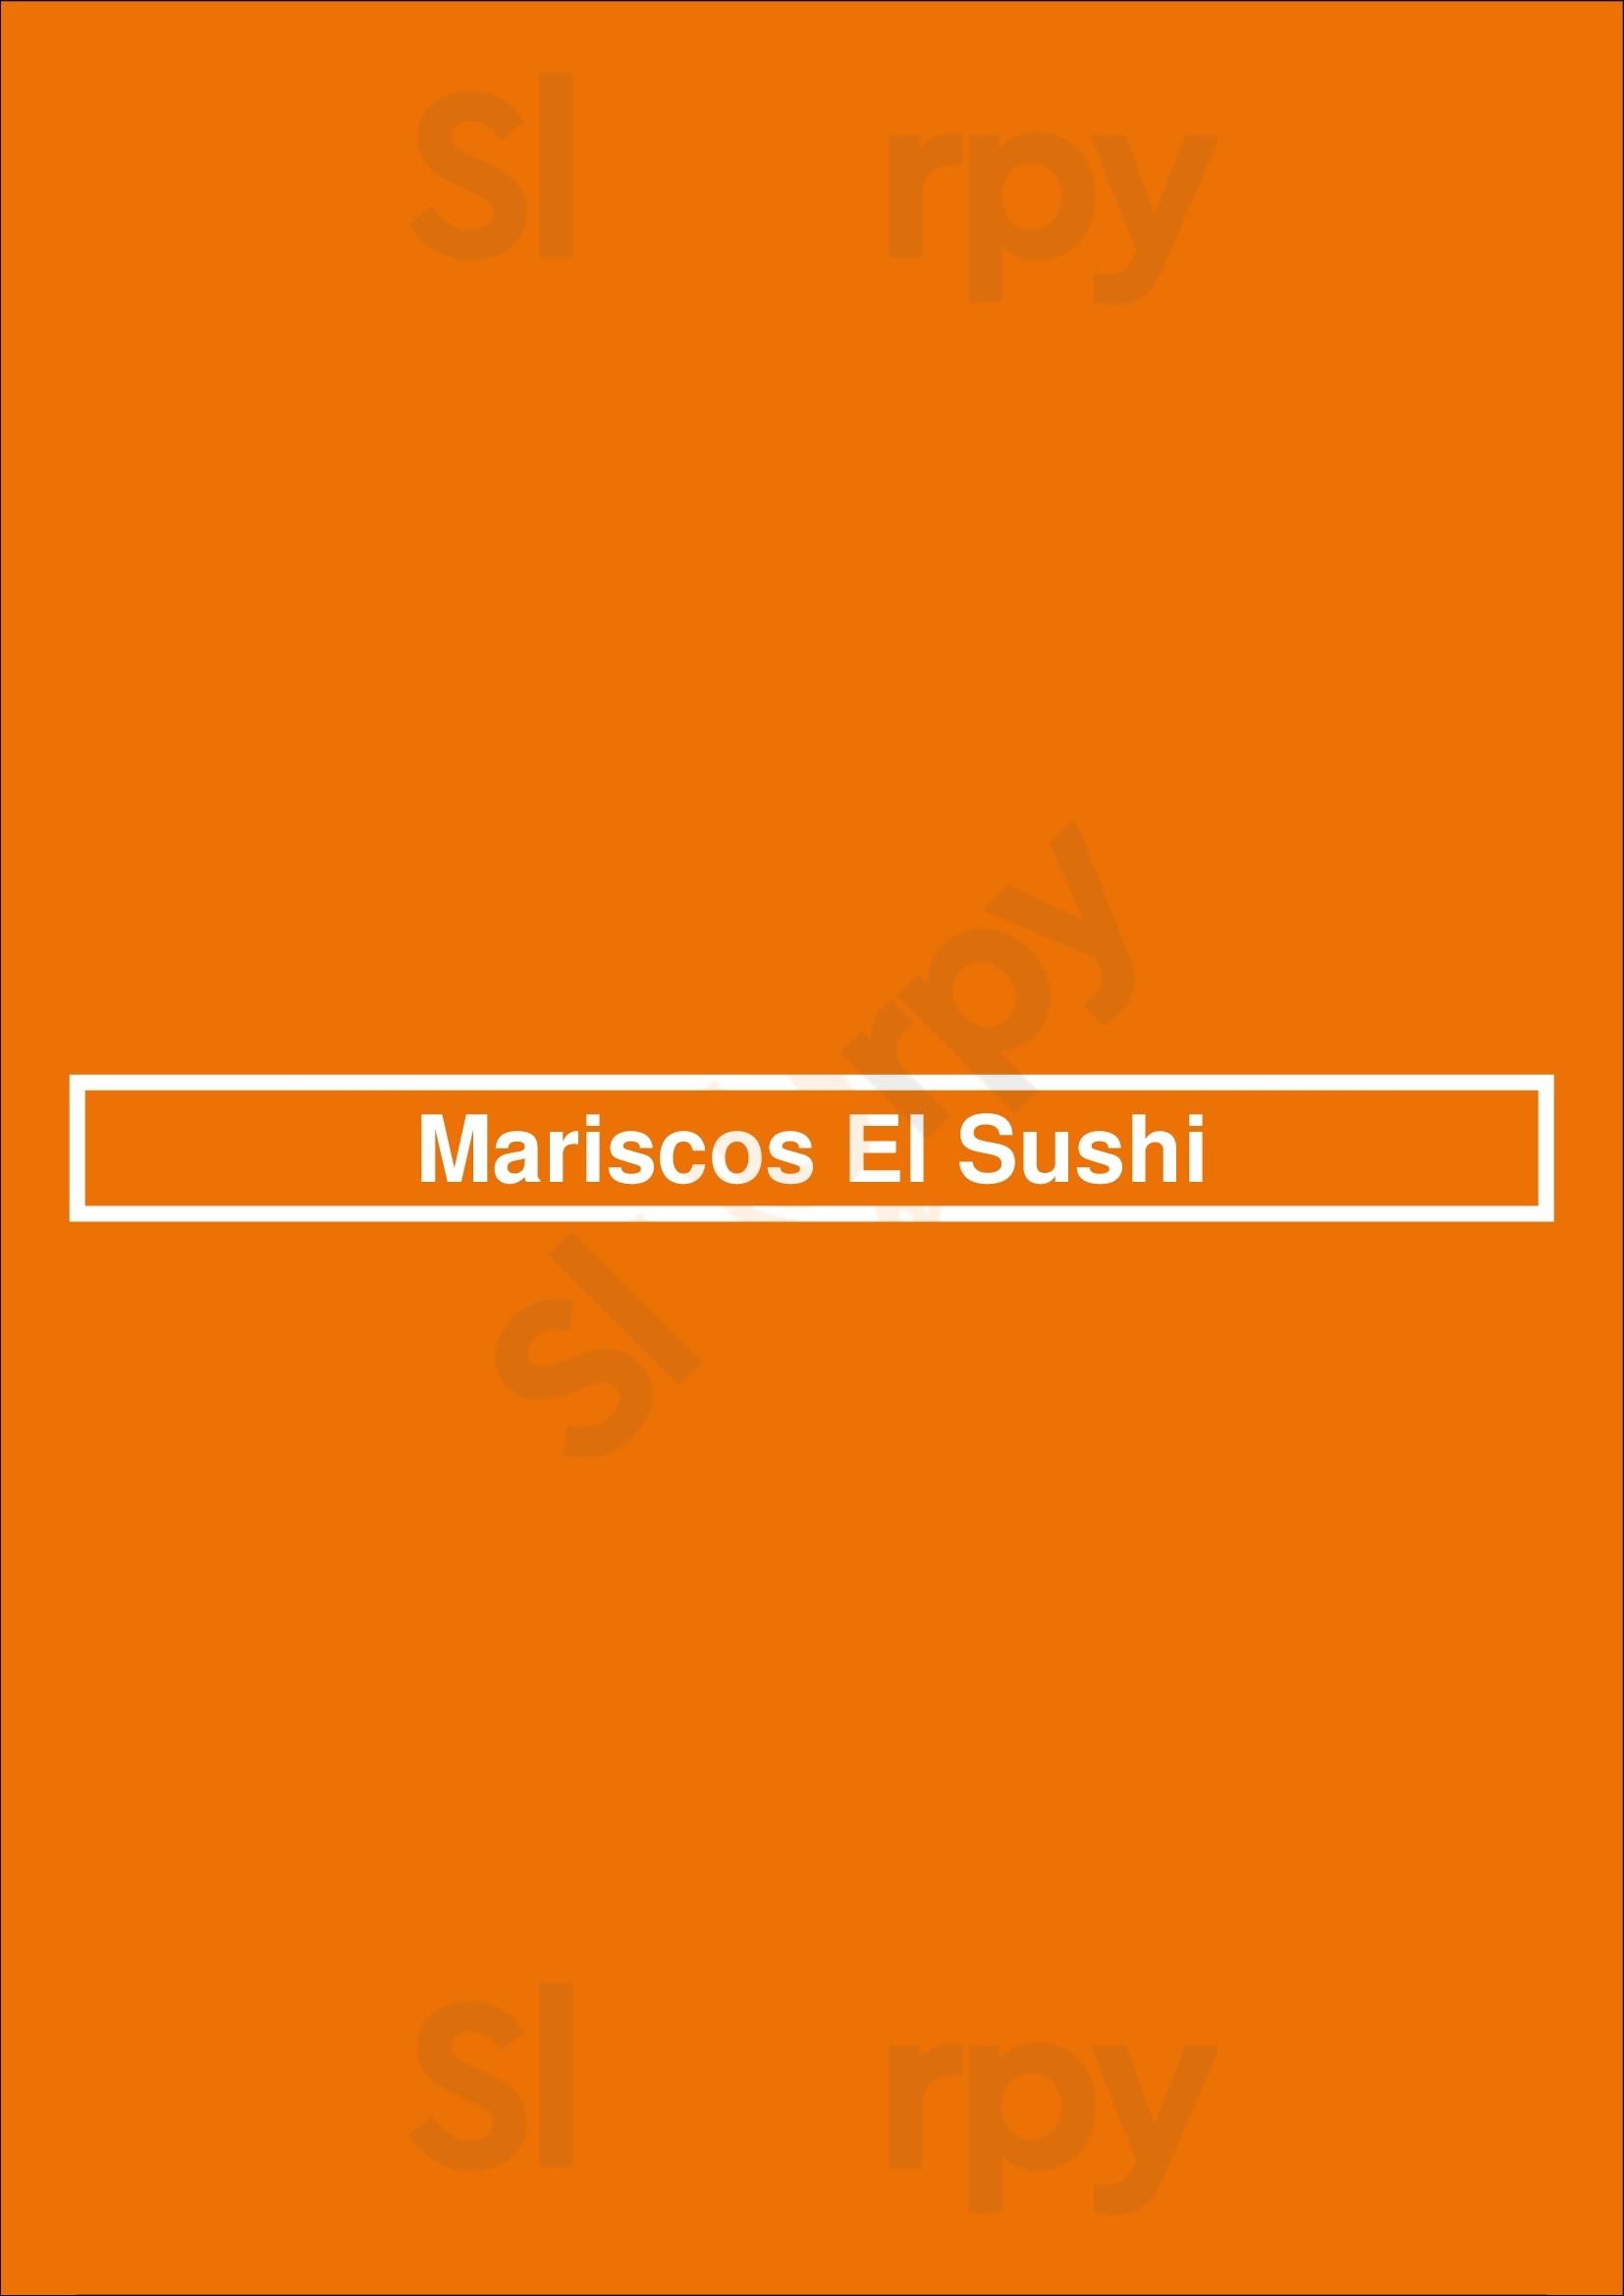 Mariscos El Sushi Fresno Menu - 1